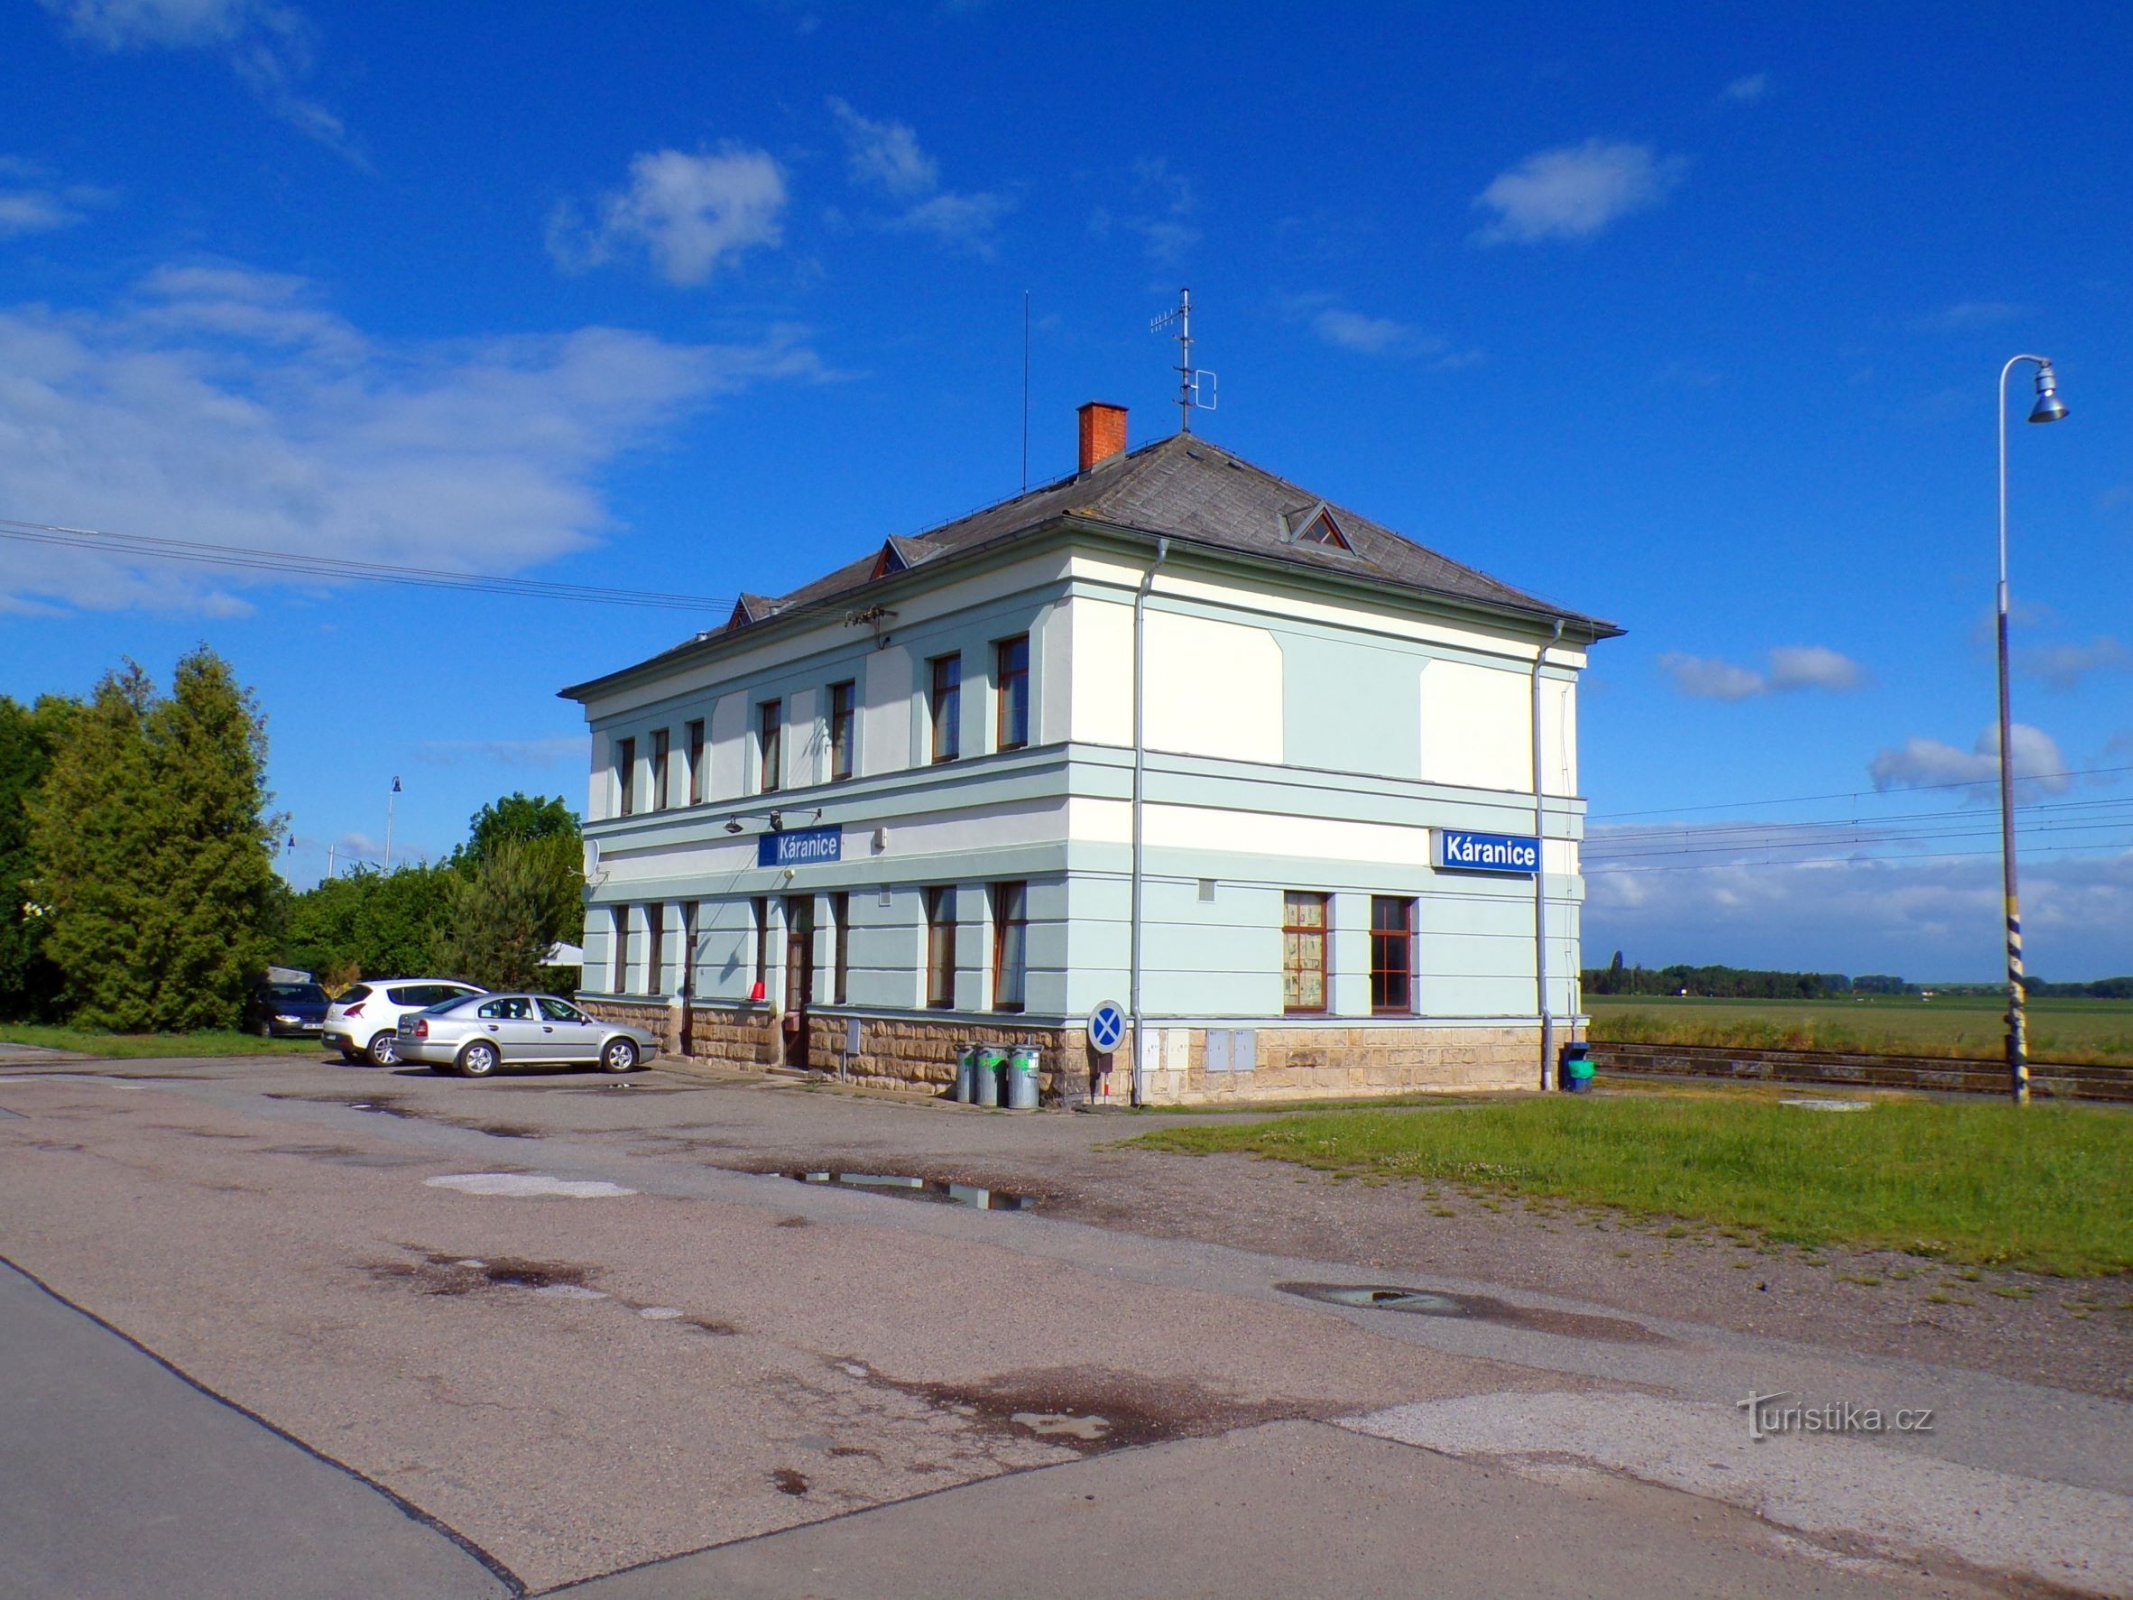 Station building (Káranice, 29.5.2022/XNUMX/XNUMX)